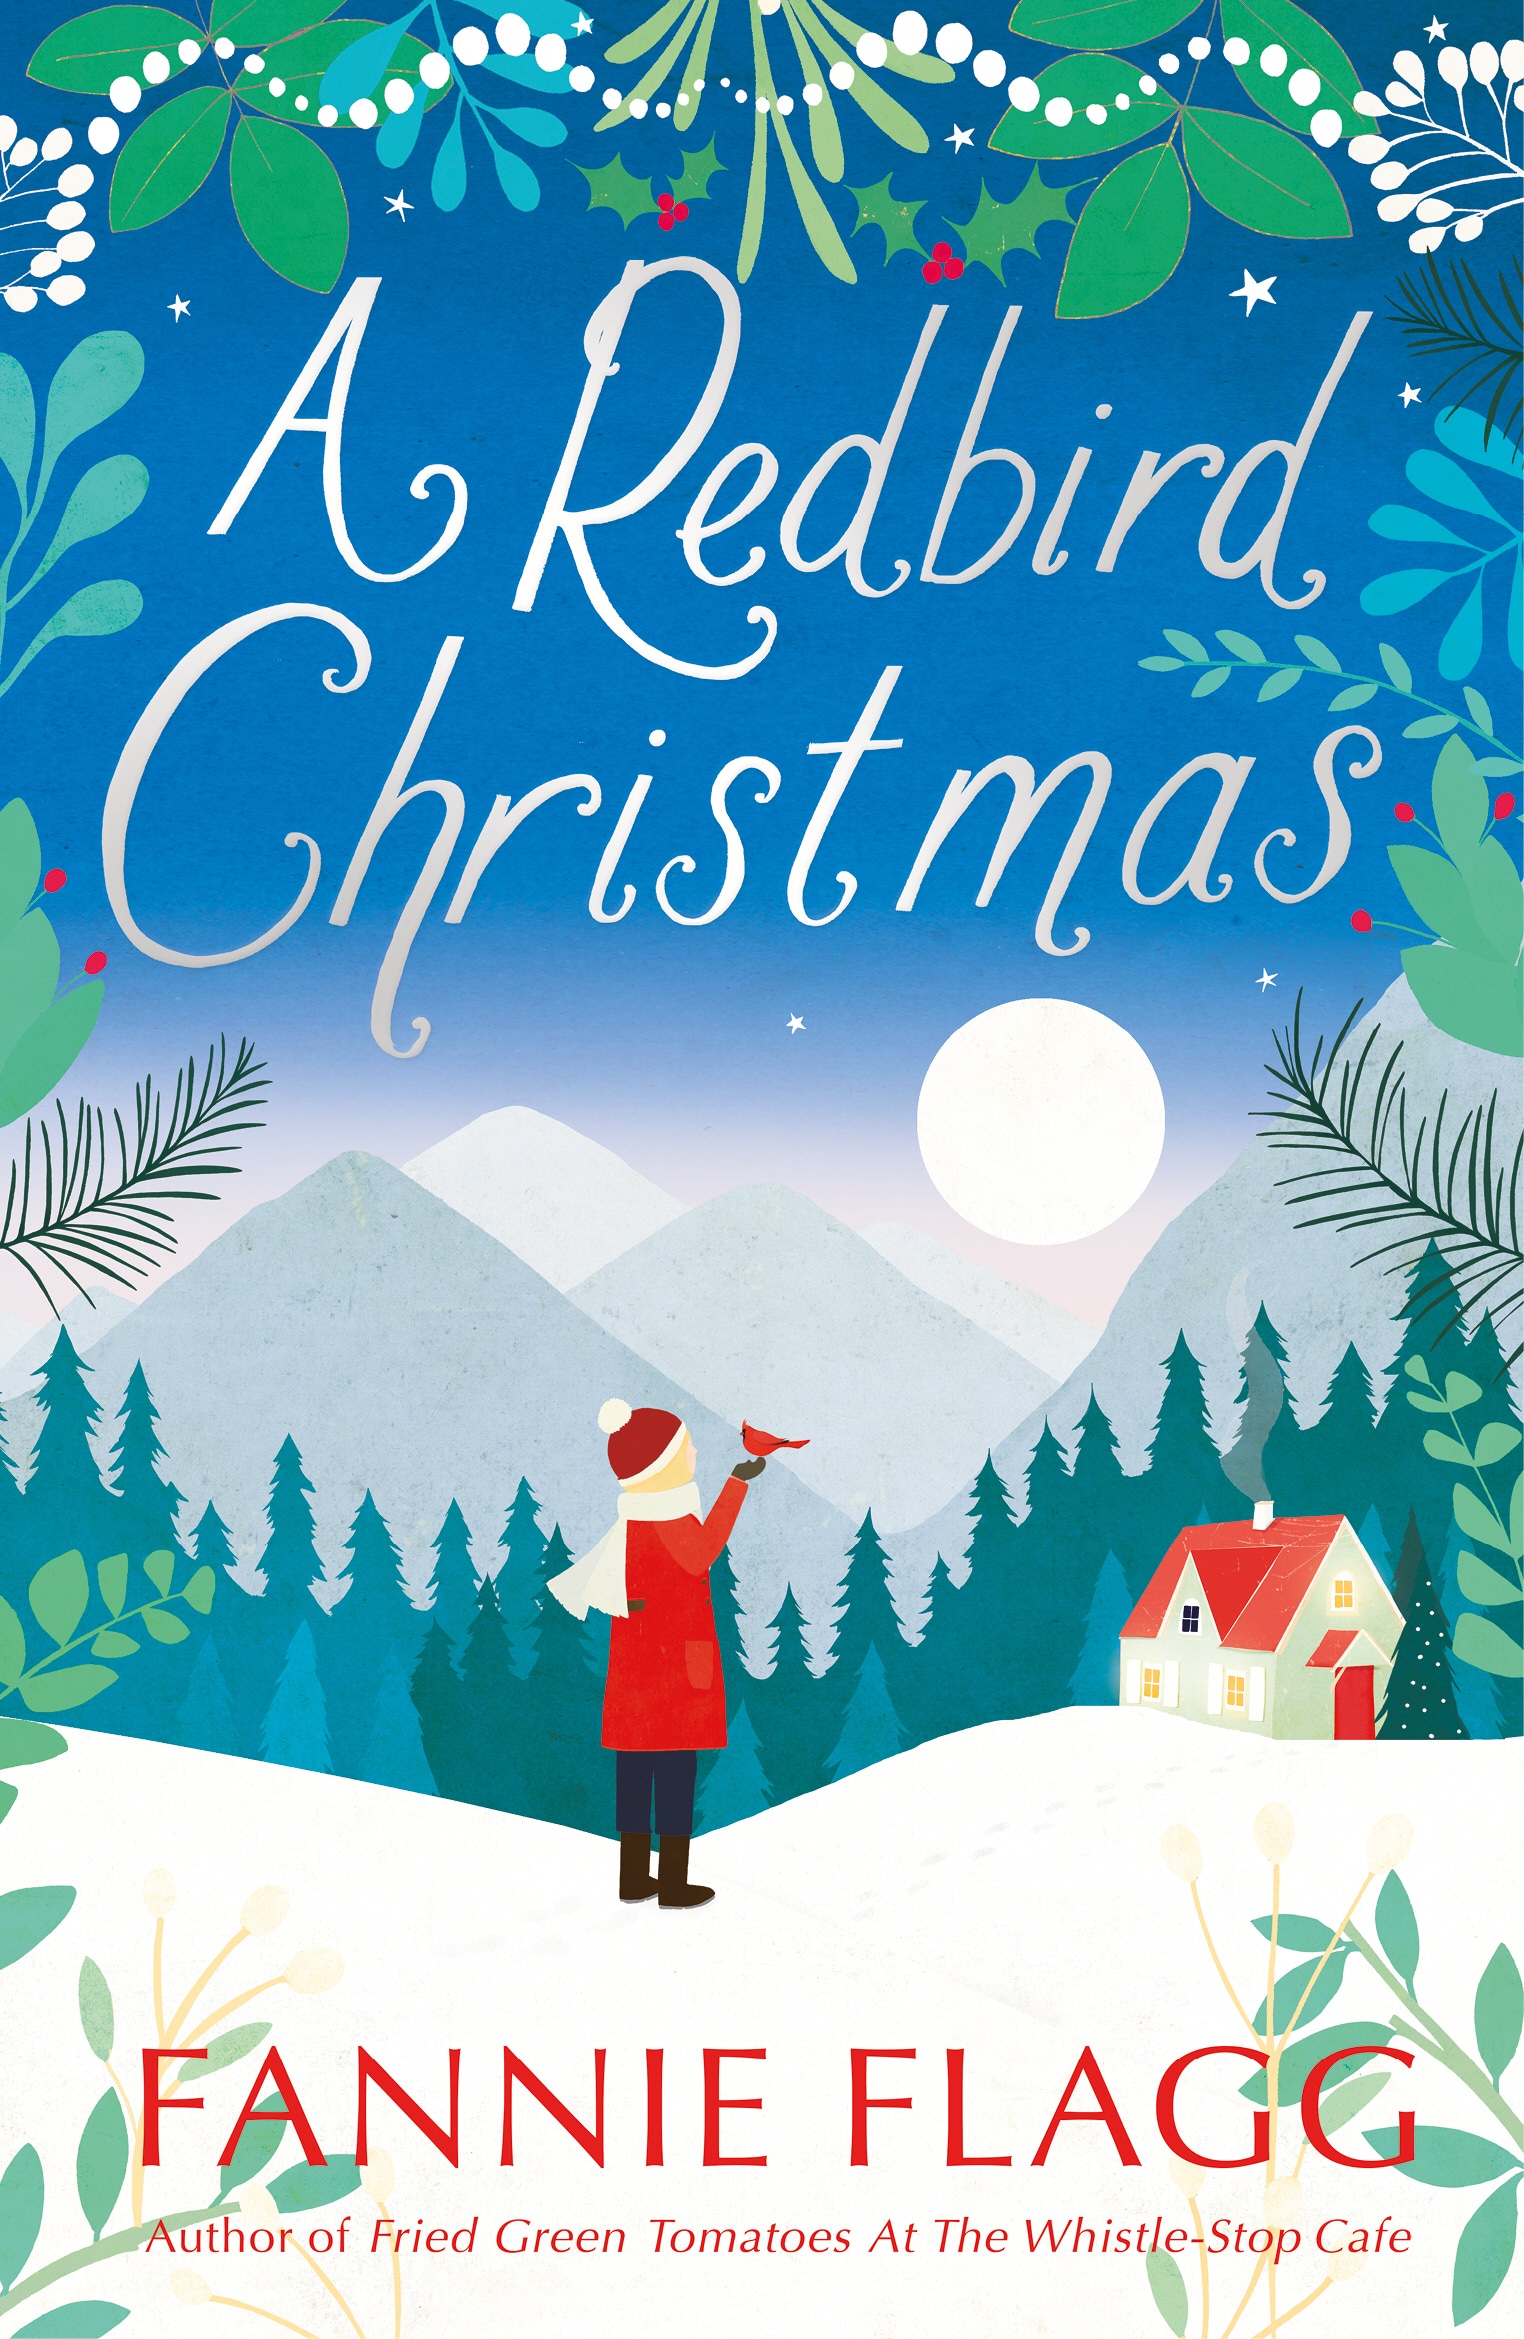 Book “A Redbird Christmas” by Fannie Flagg — November 3, 2005